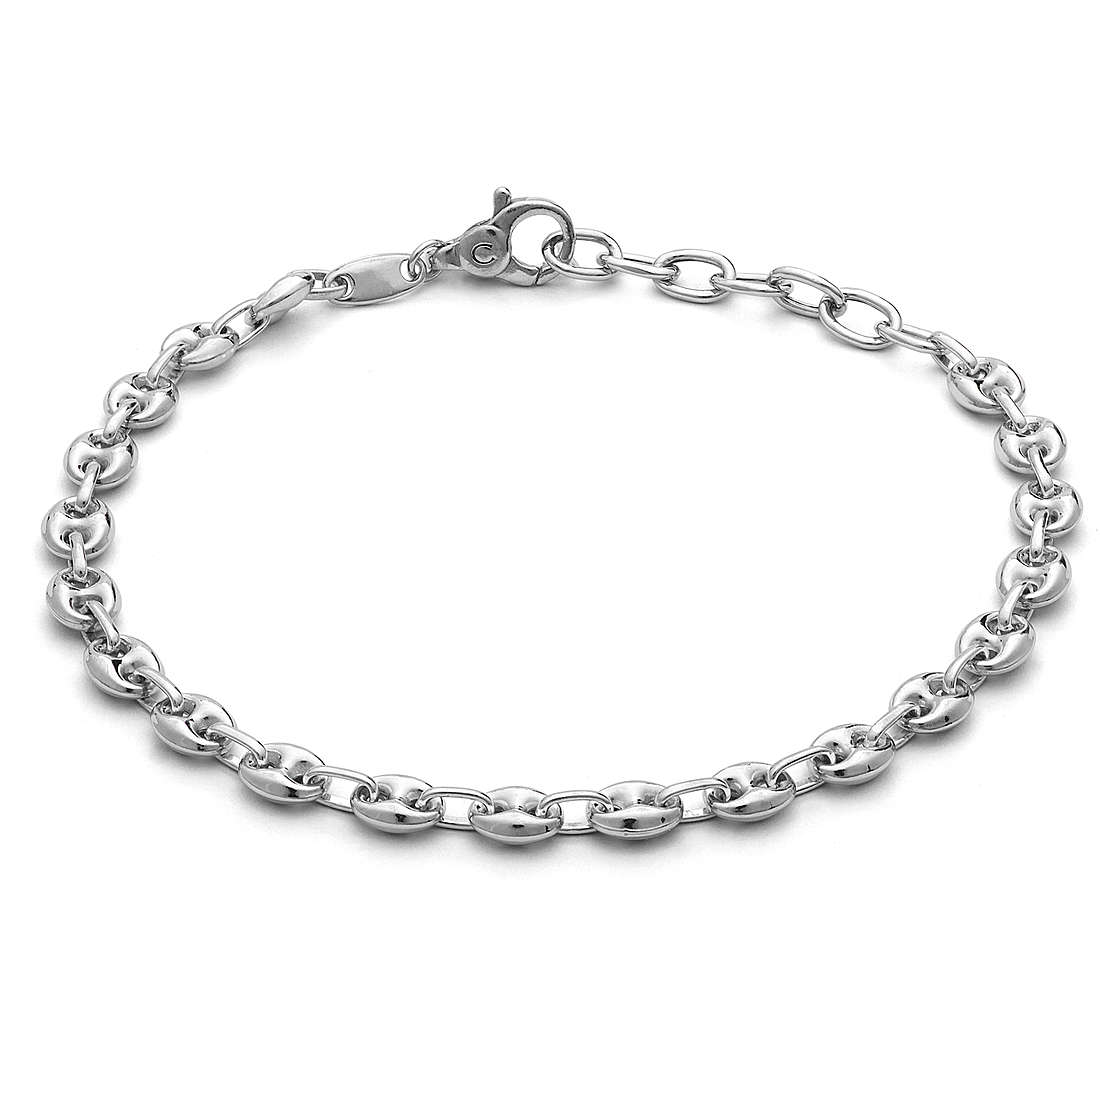 Comete Elegant bracelet man Bracelet with 925 Silver Chain jewel UBR 1005